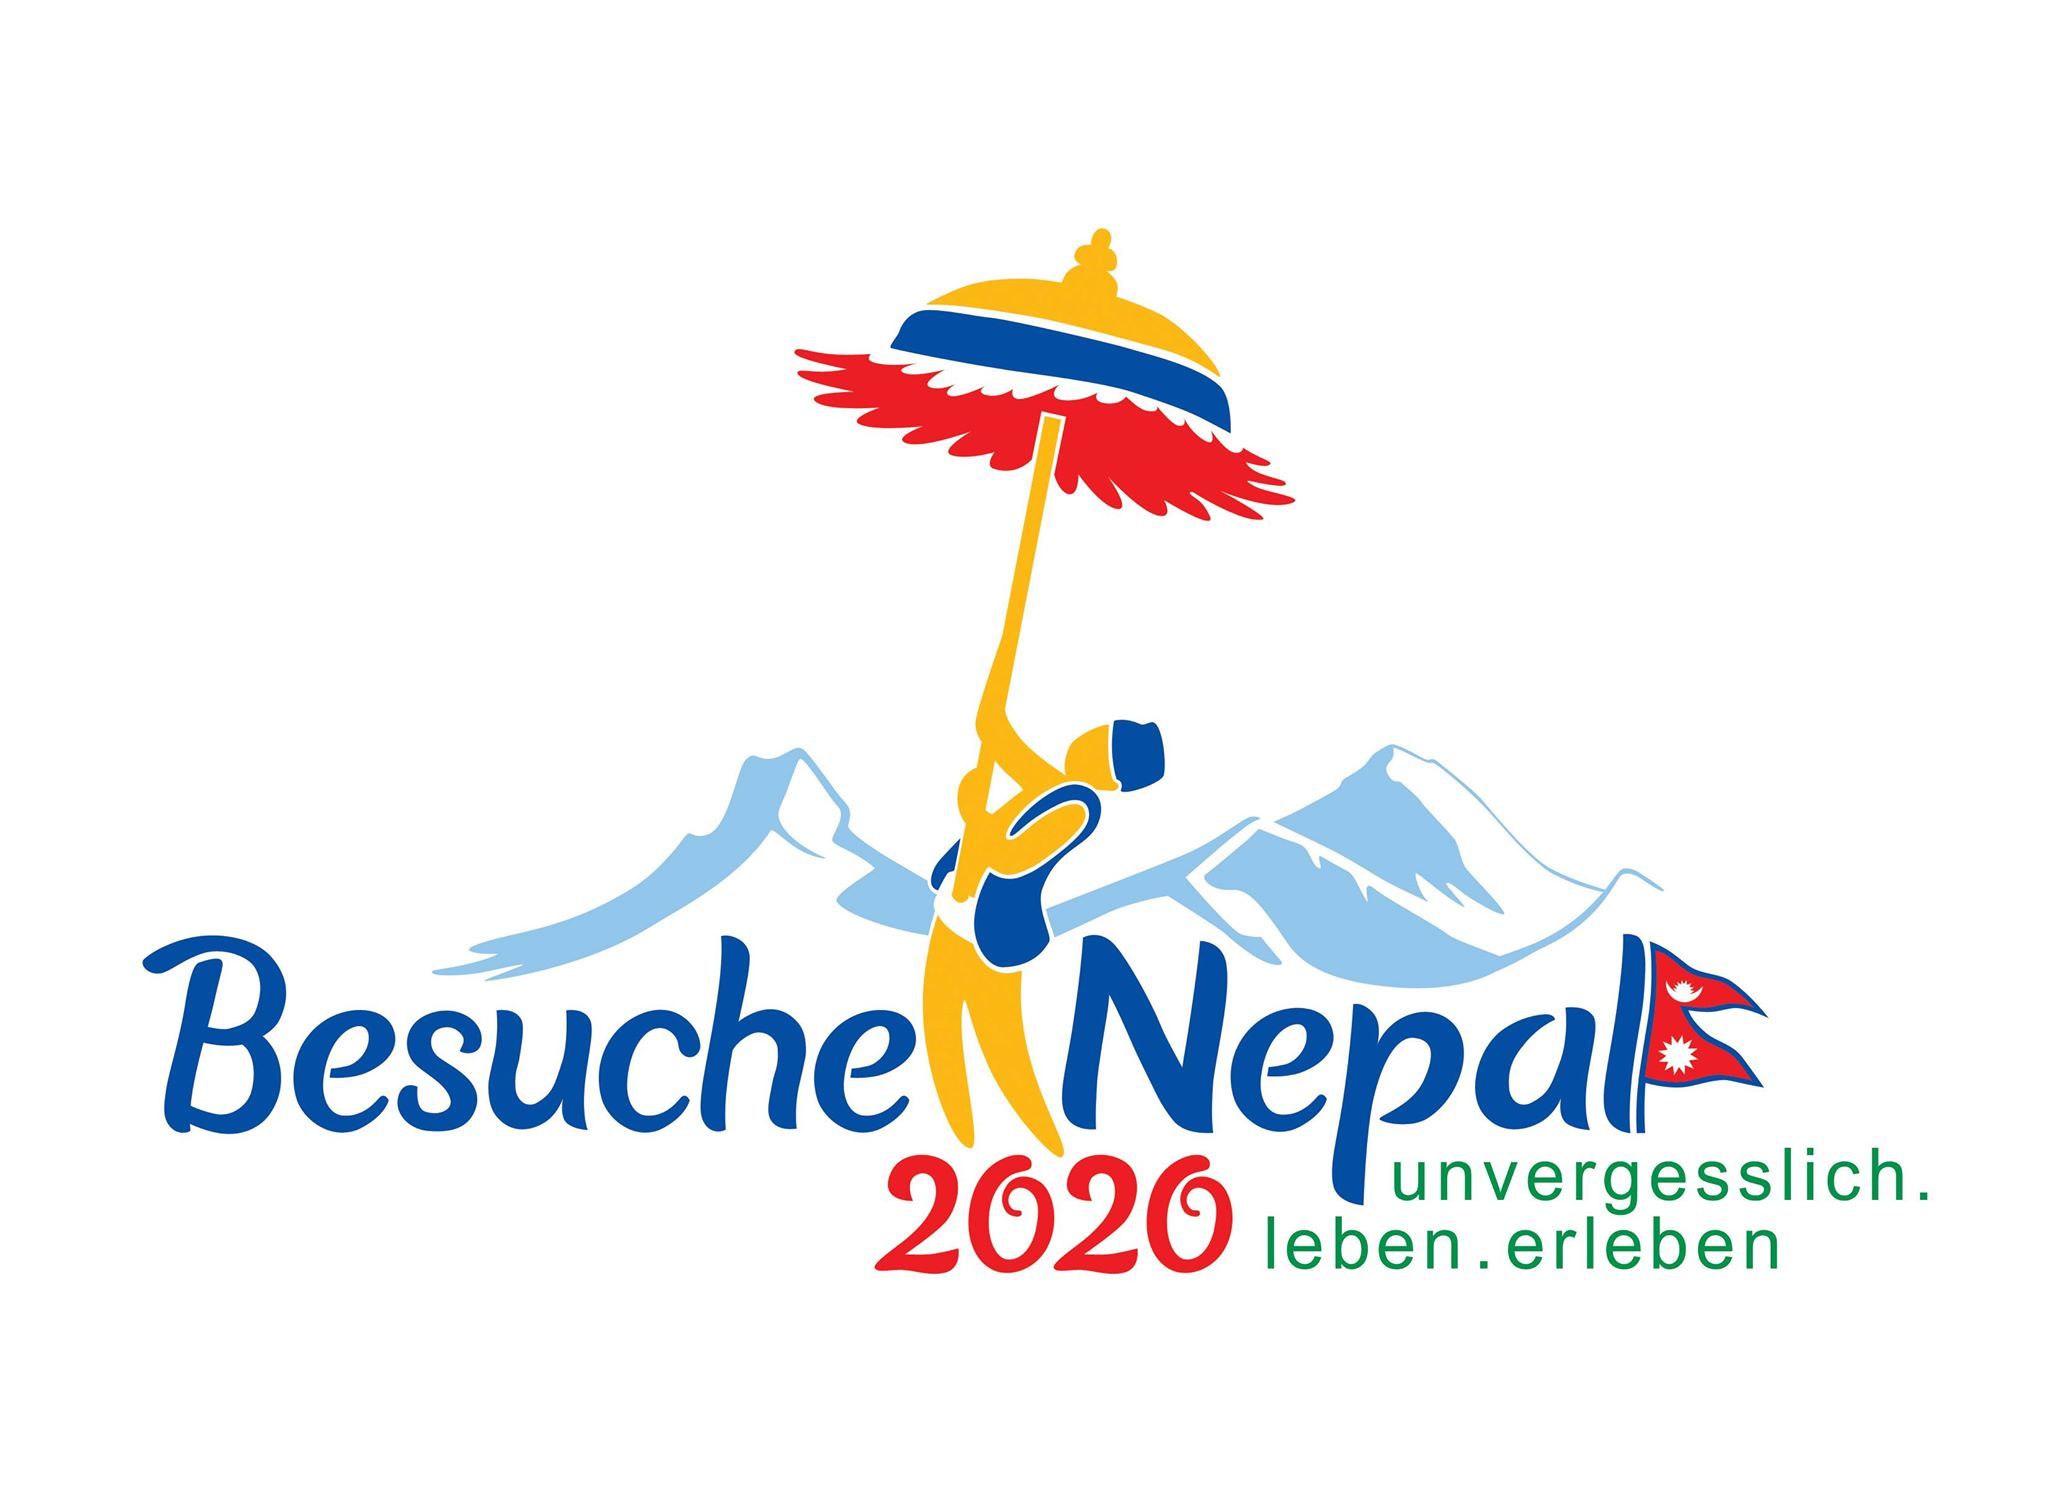 Visit Nepal 2020 - Official Logo in German